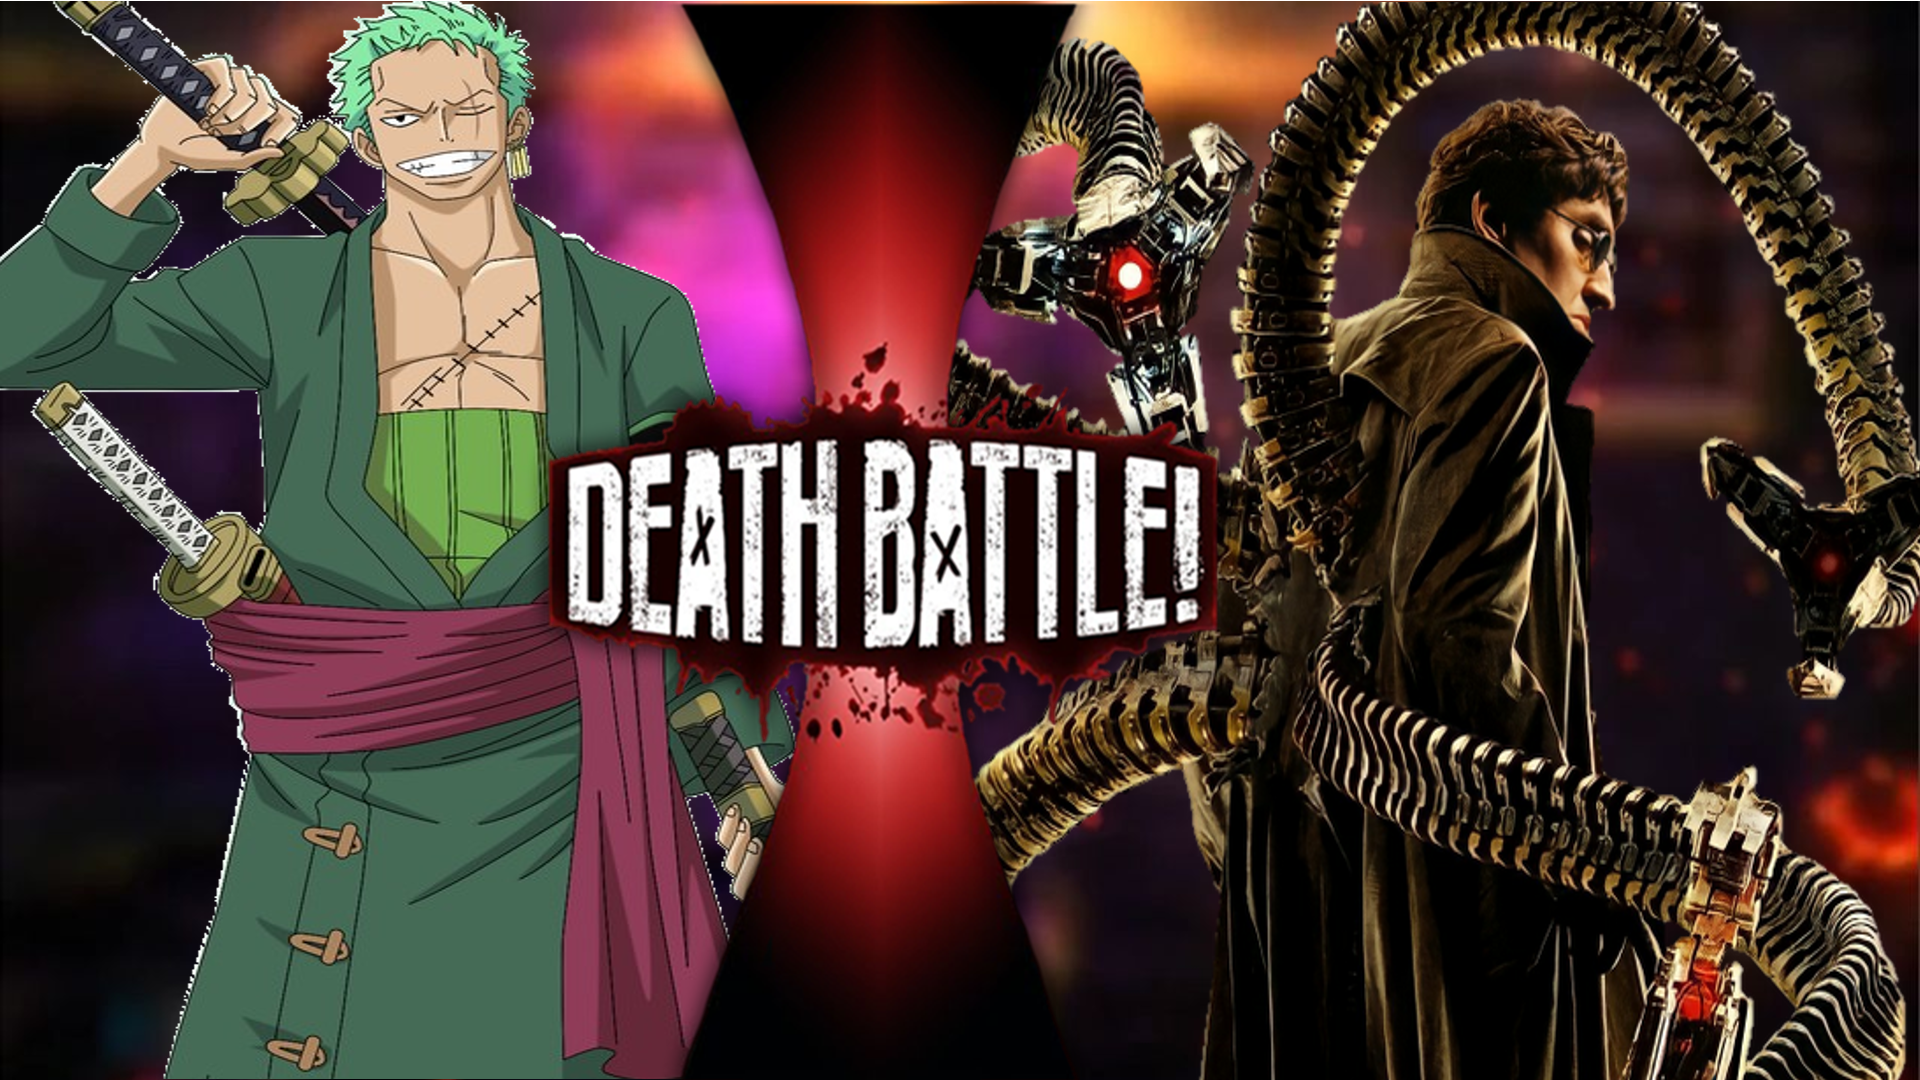 Versus Battle - Hammerhead (OPM) vs Don Krieg (One Piece)